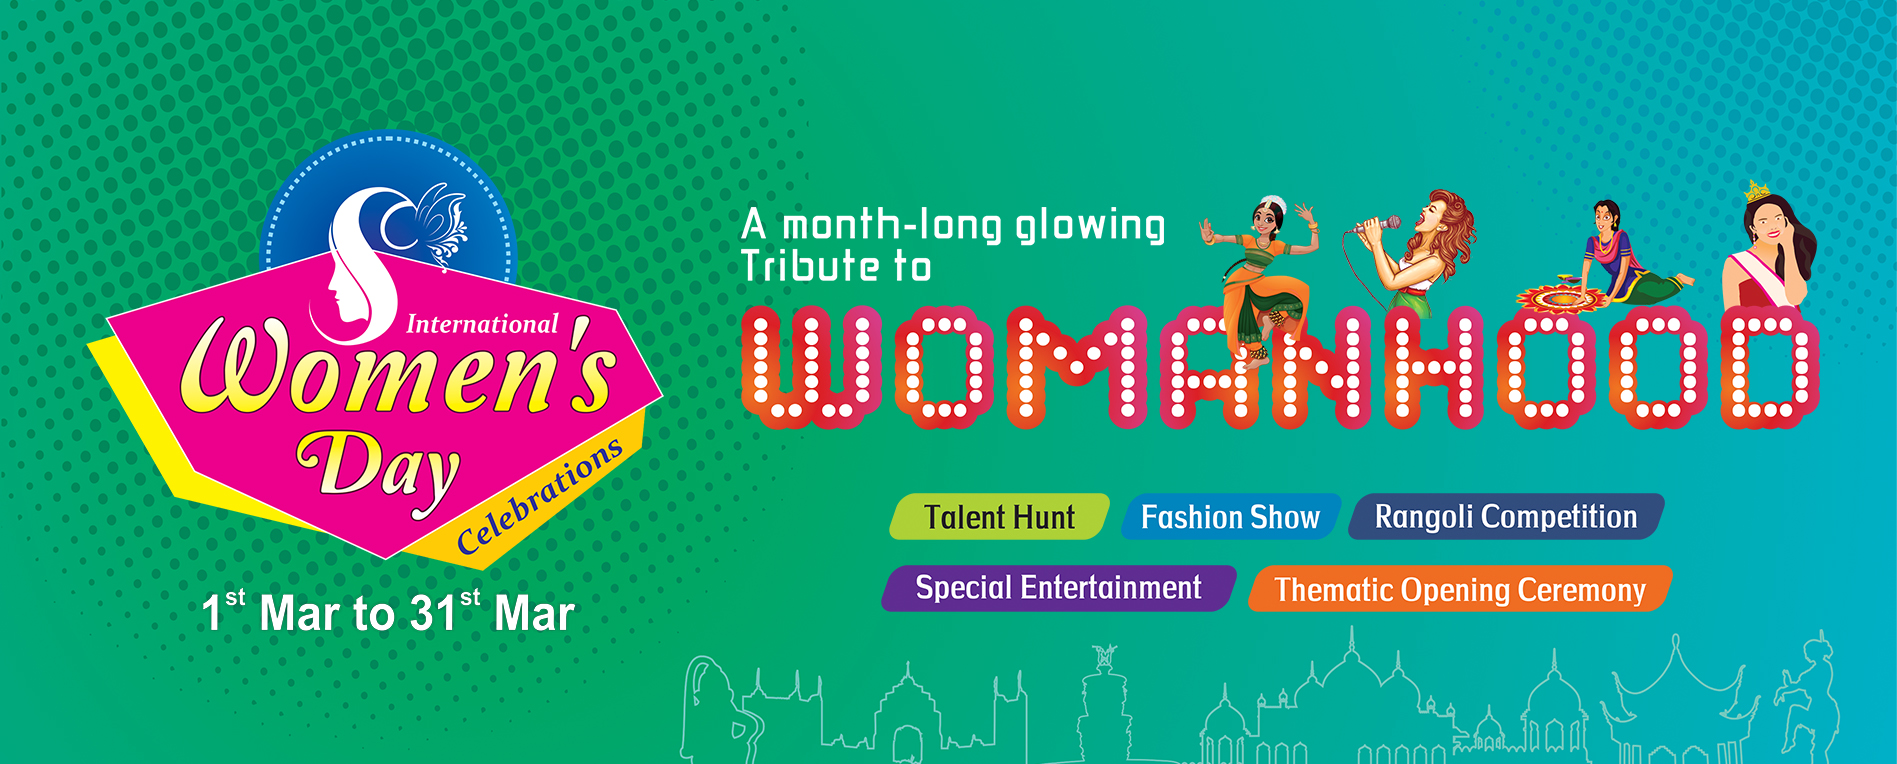 Women's Day 2019 Celebrations at Ramoji Film City, Hyderabad, Telangana, India